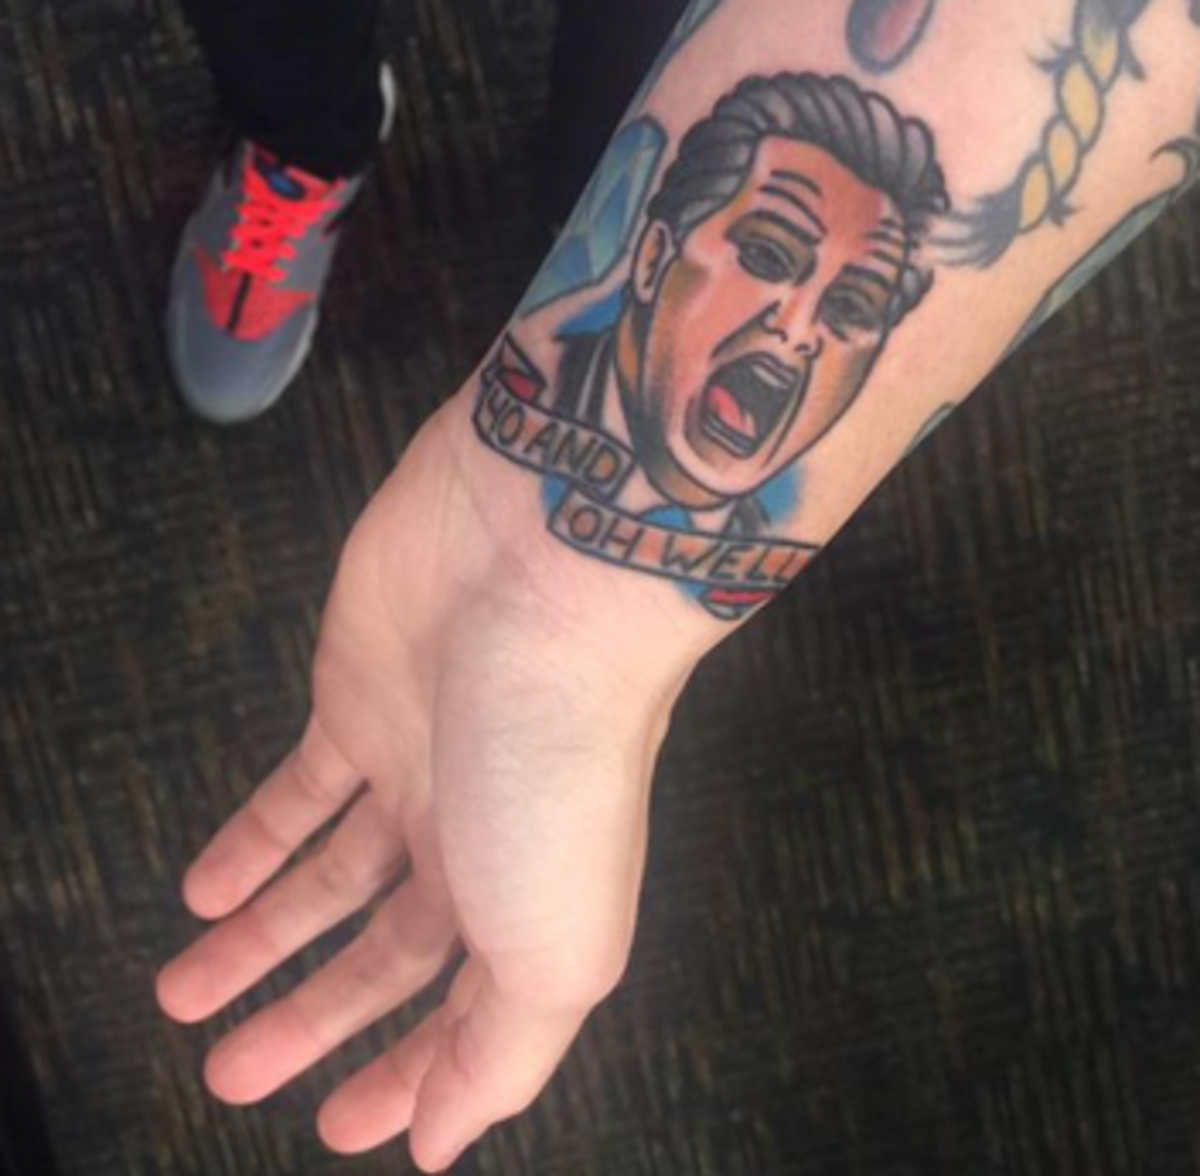 UK fan adds John Wall tattoo next to his Tyler Ulis tattoo